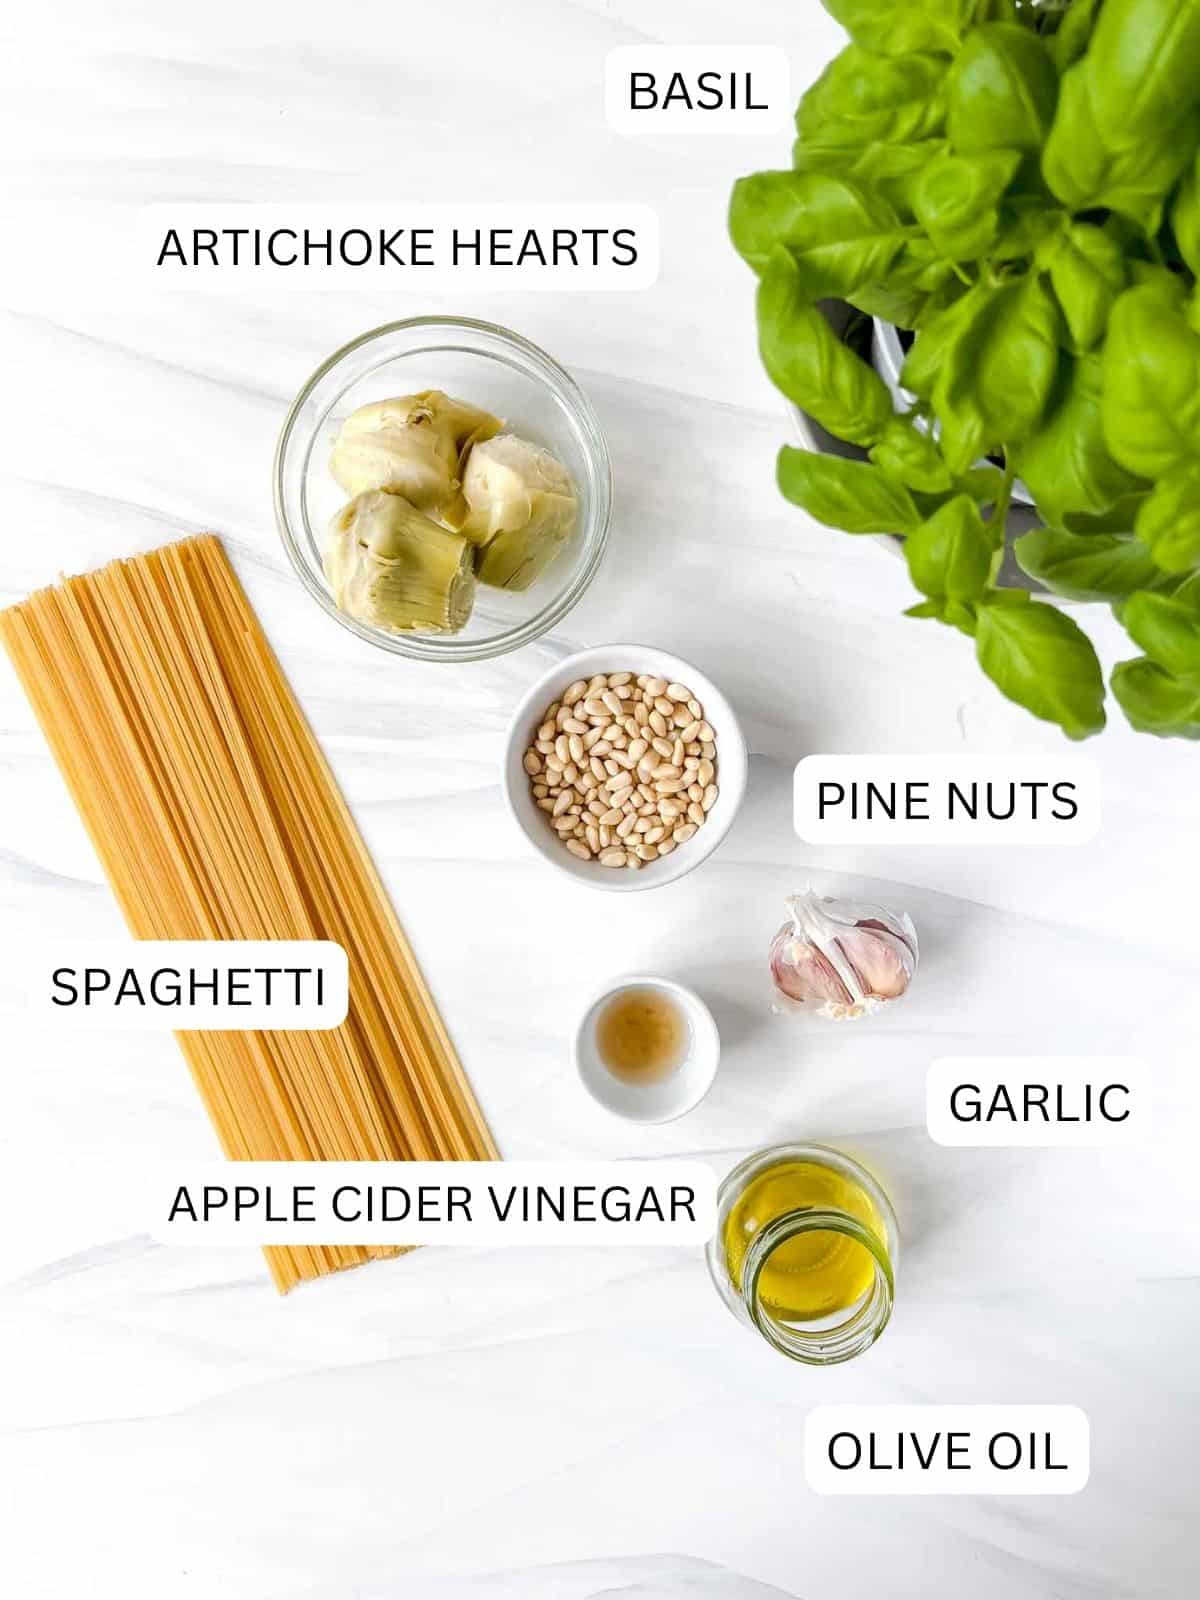 individually labelled basil, spaghetti, artichoke hearts, pine nuts, garlic, olive oil and apple cider vinegar.